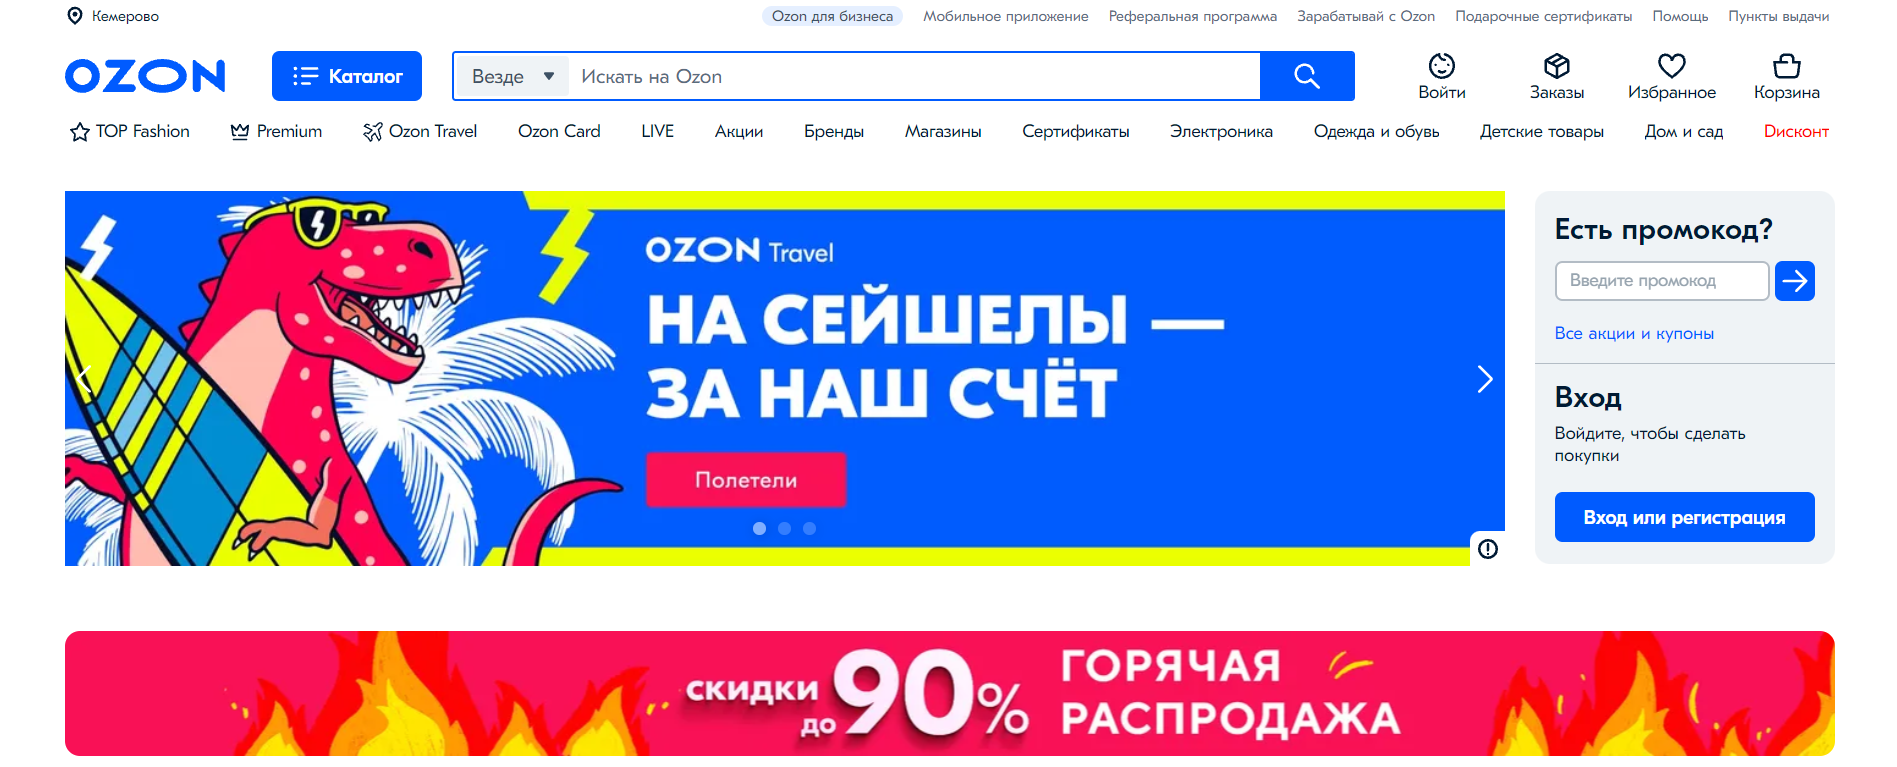 Главная страница маркетплейса Ozon